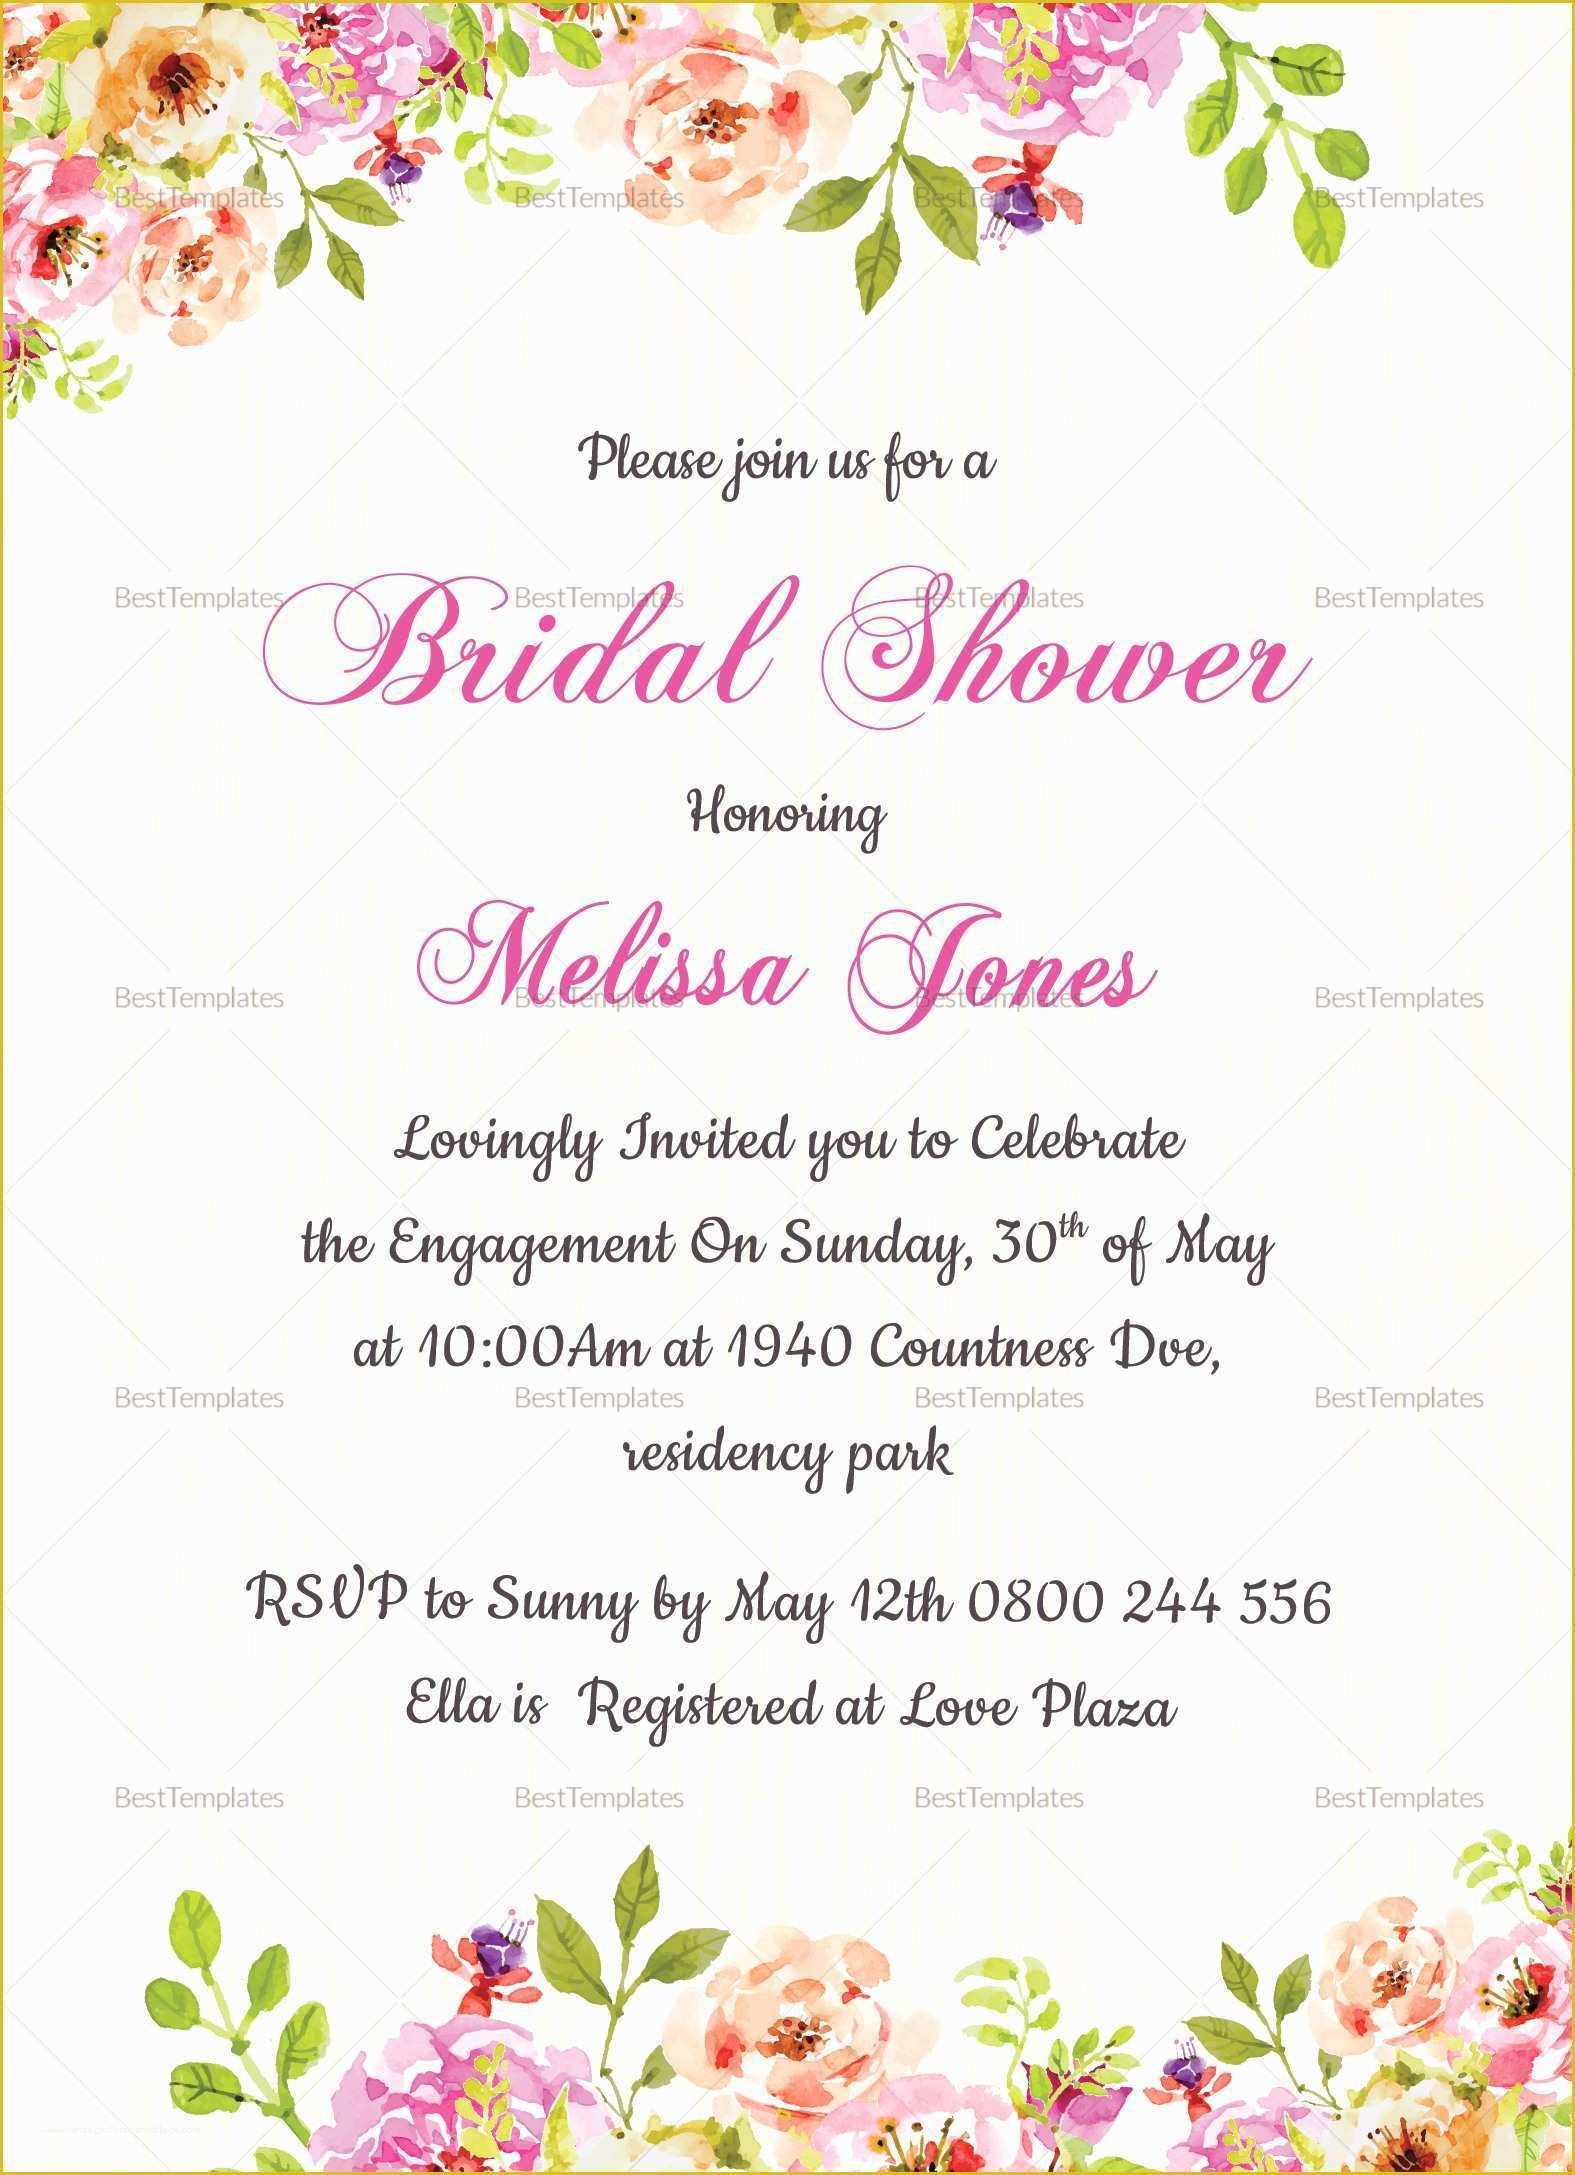 Bridal Shower Invitation Templates Microsoft Word Free Of Floral Bridal Shower Invitation Card Design Template In